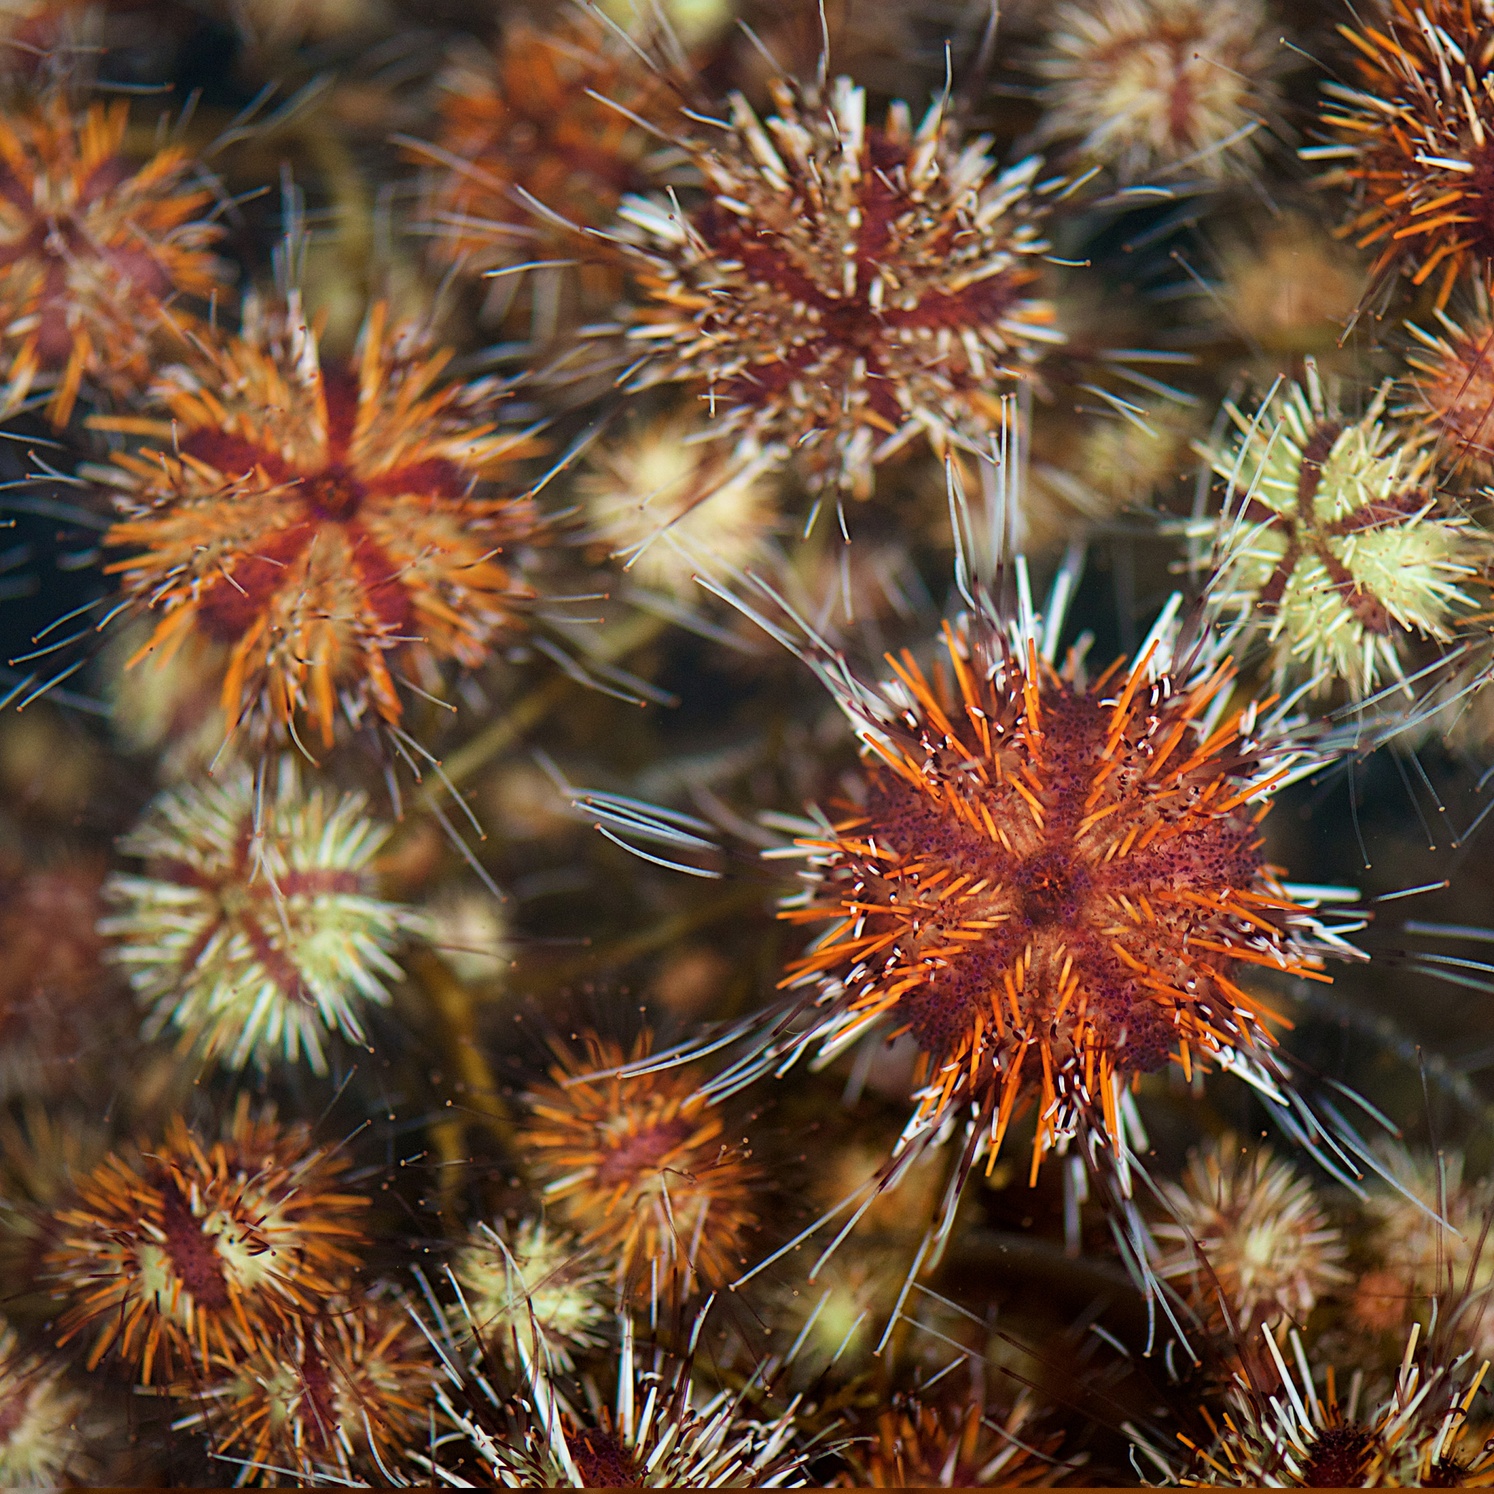 NMSC aquaculture research on sea urchin farming